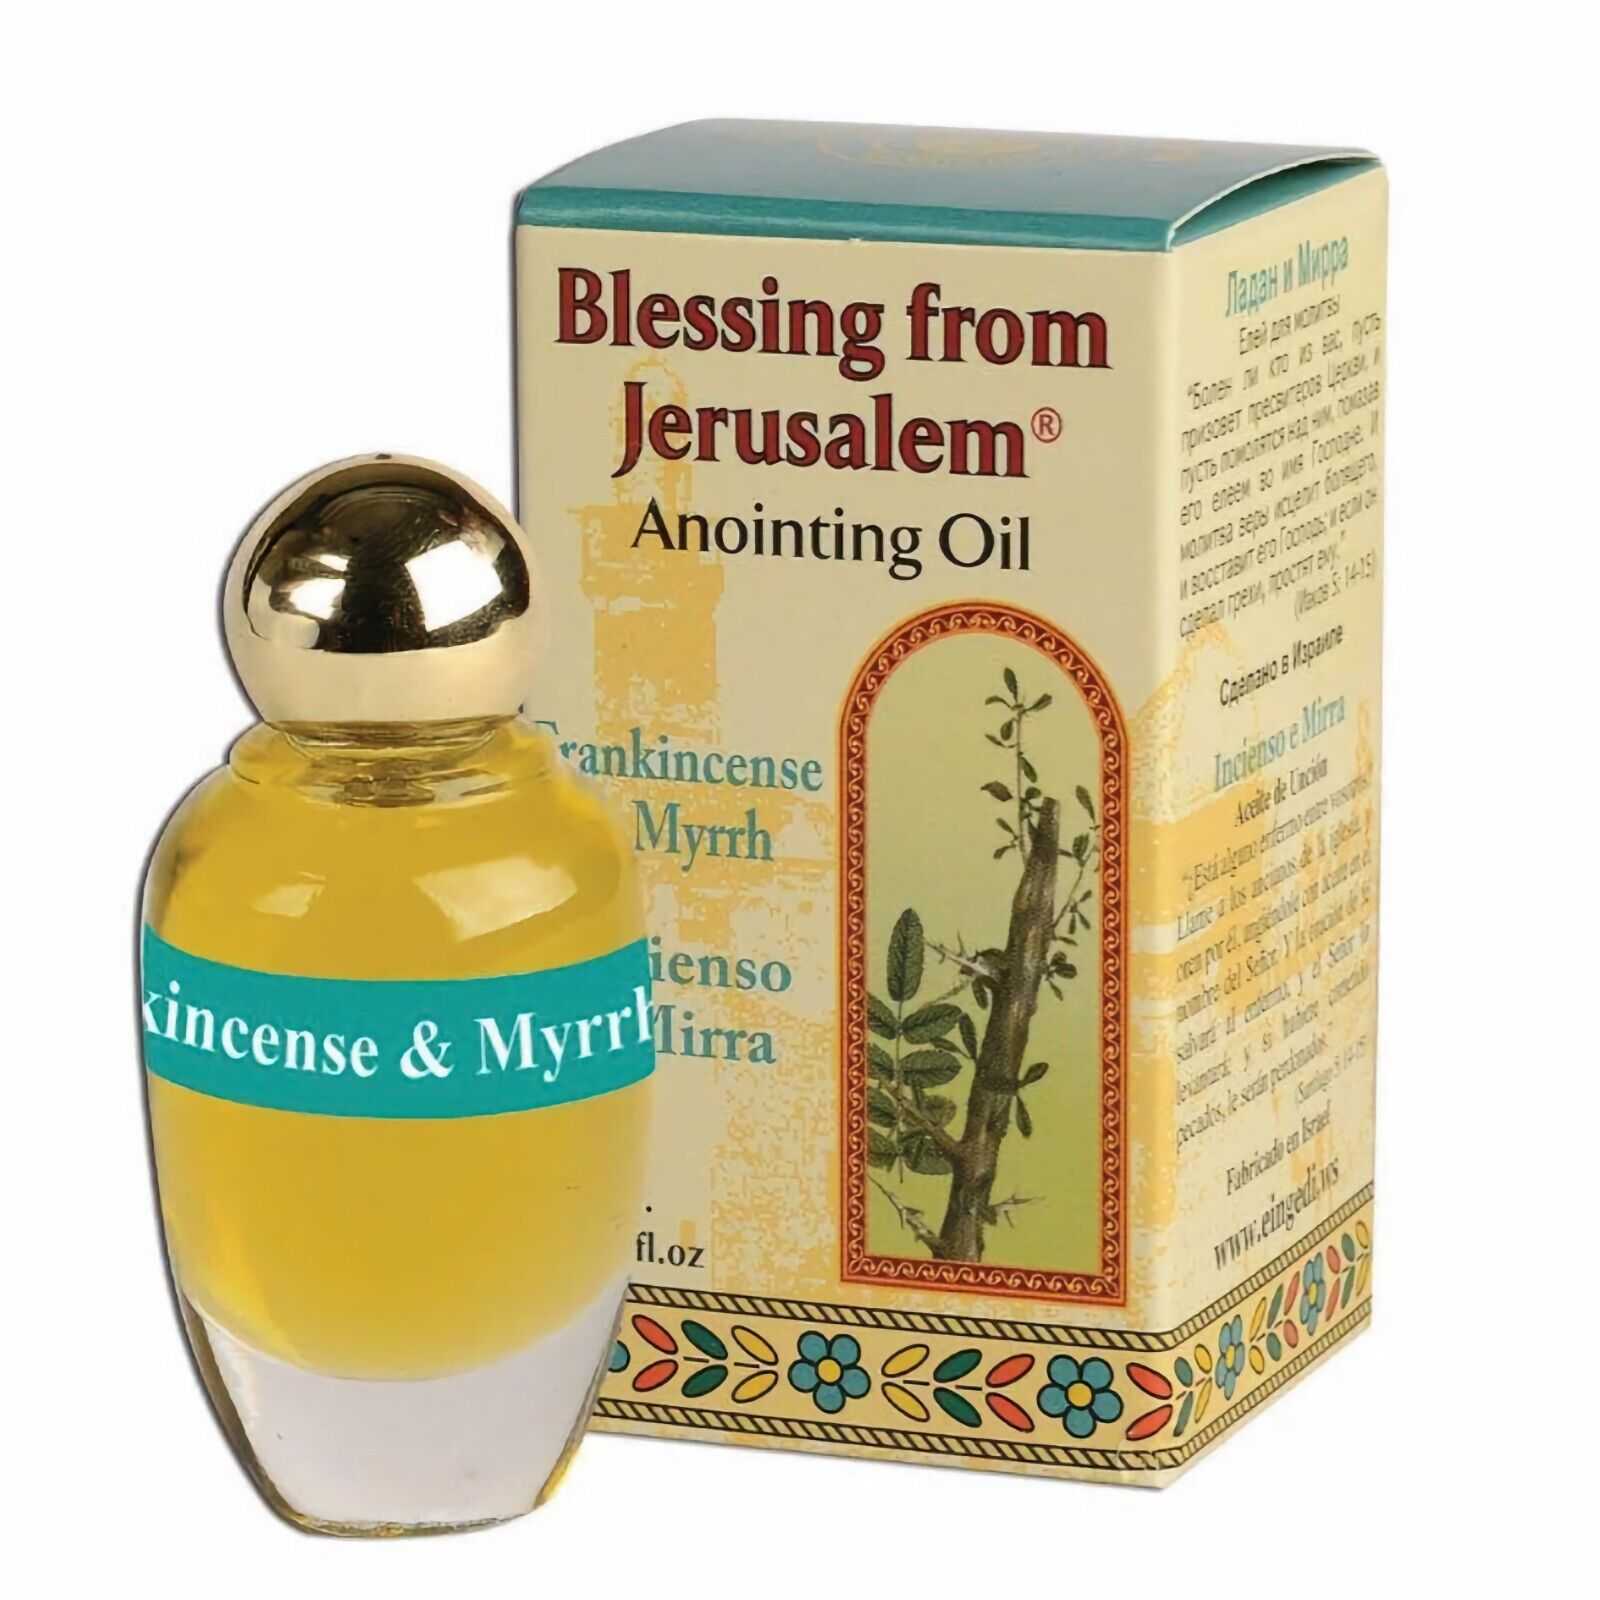 Anointing Oil Frankincense and Myrrh 12 ml. - 0.4 fl.oz. from Jerusalem